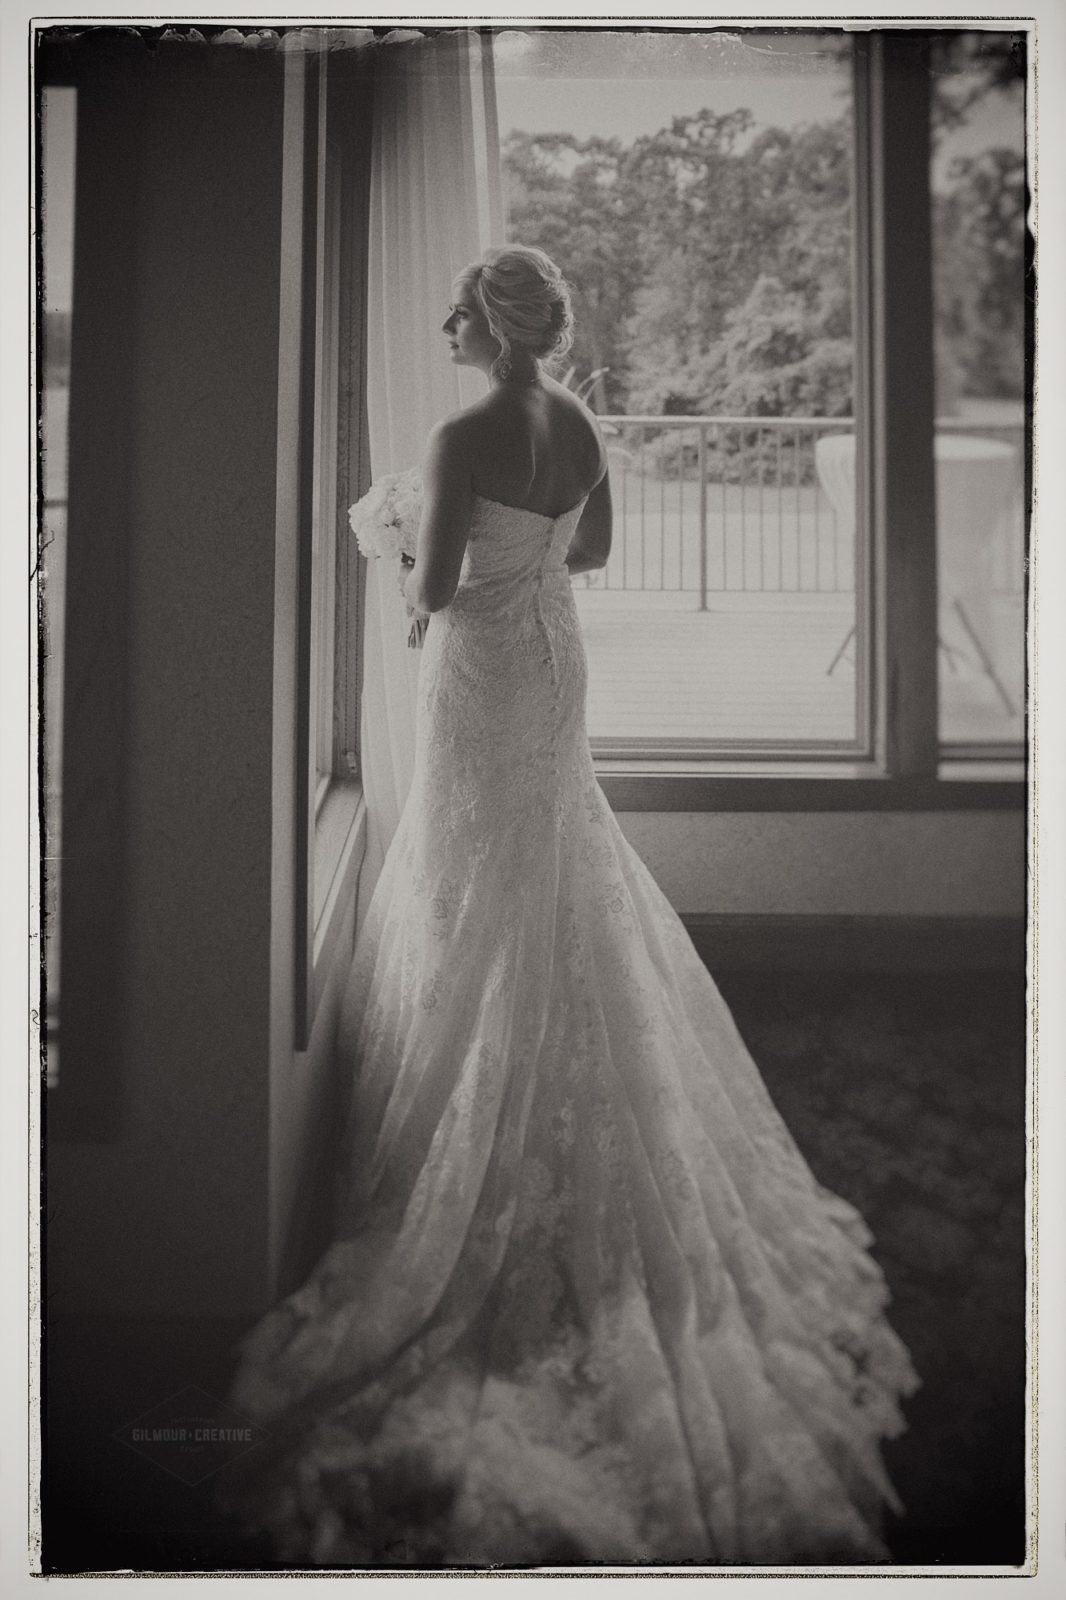 Minnesota Bride Photography